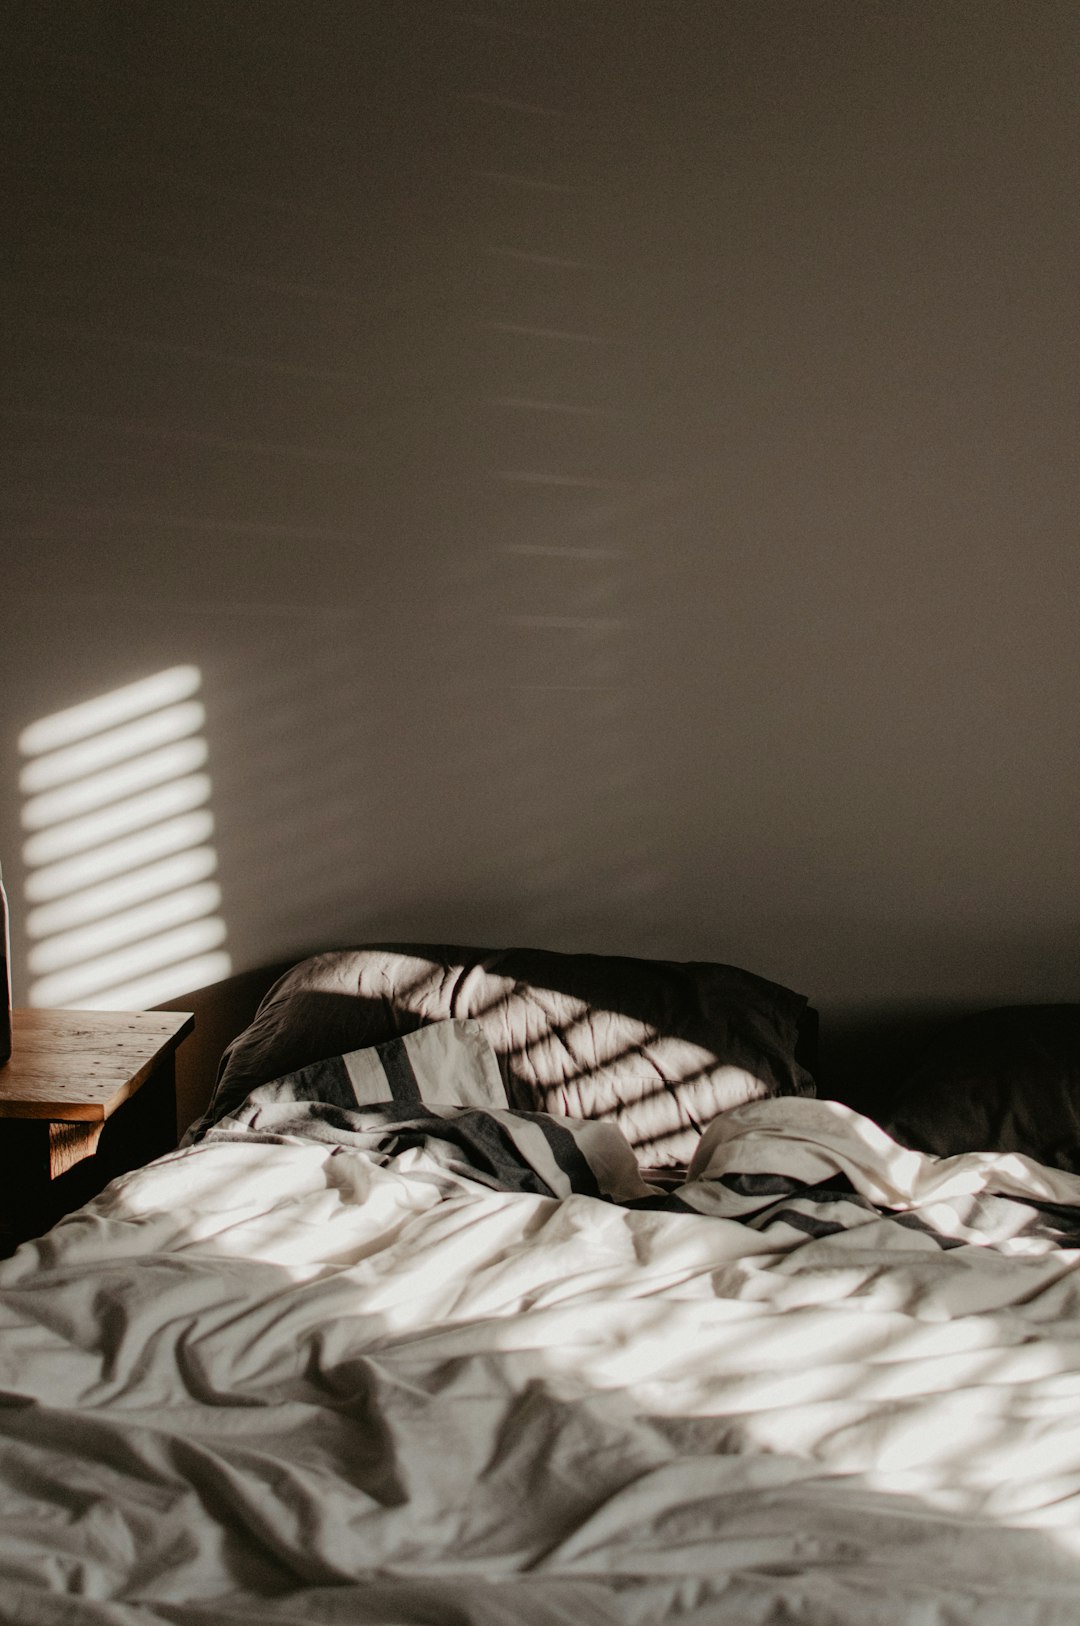  sunlight inside bed bed